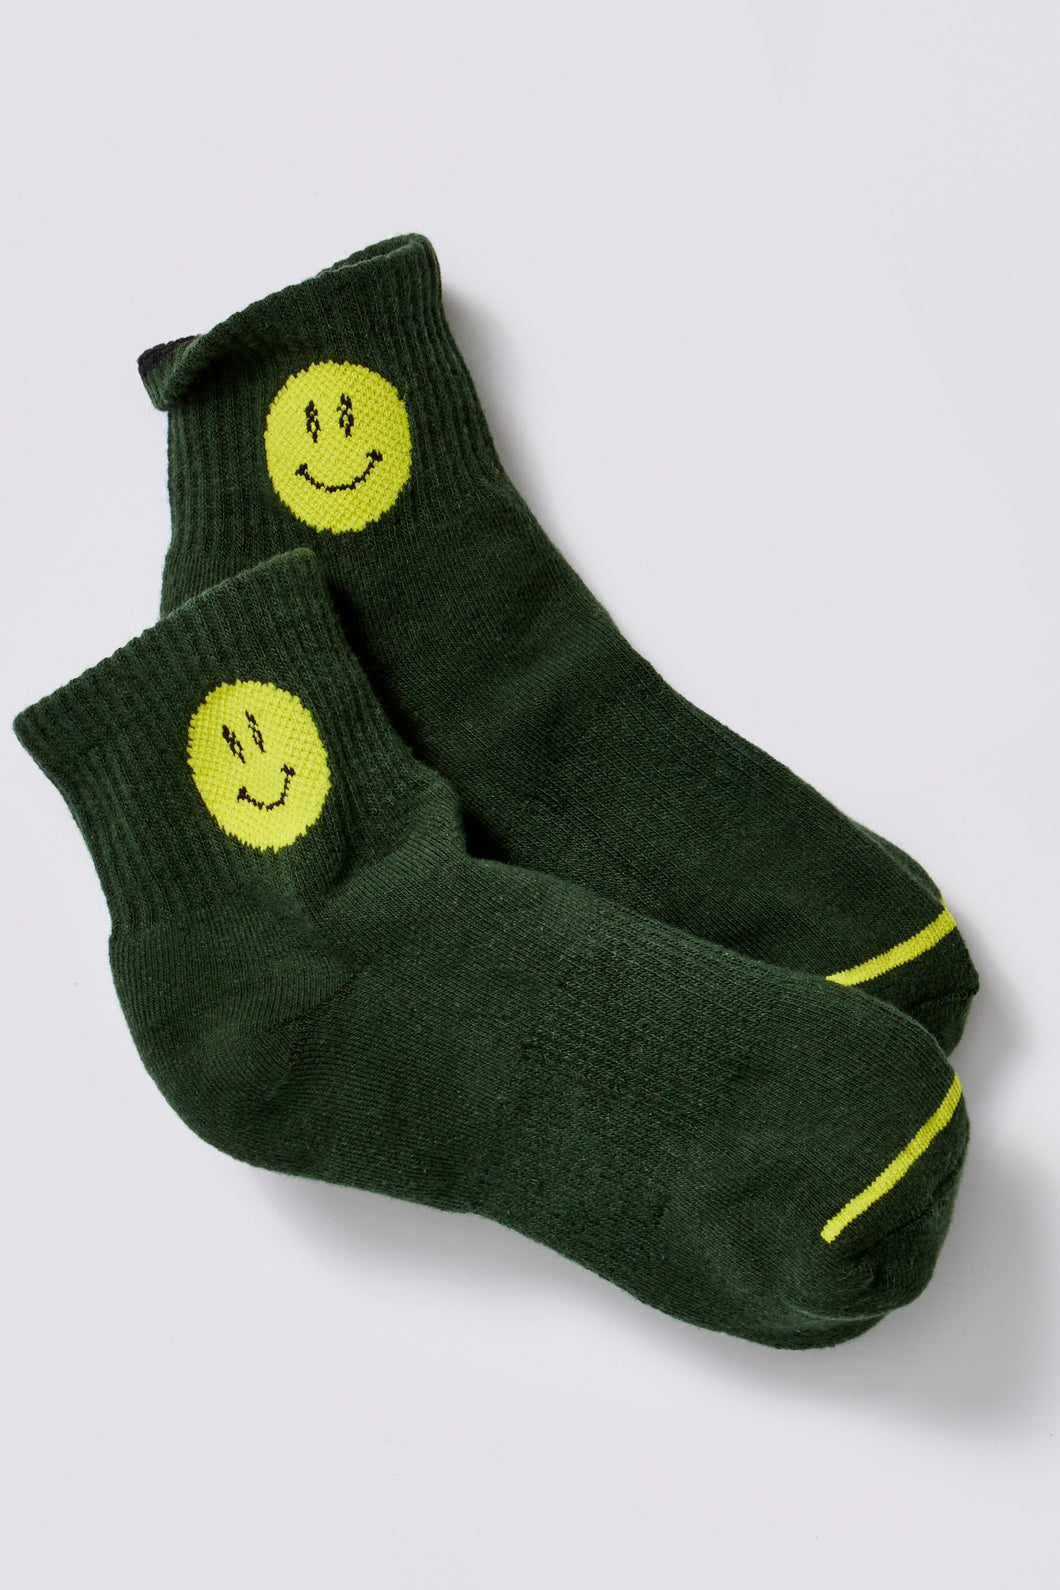 Movement Smiling Sock